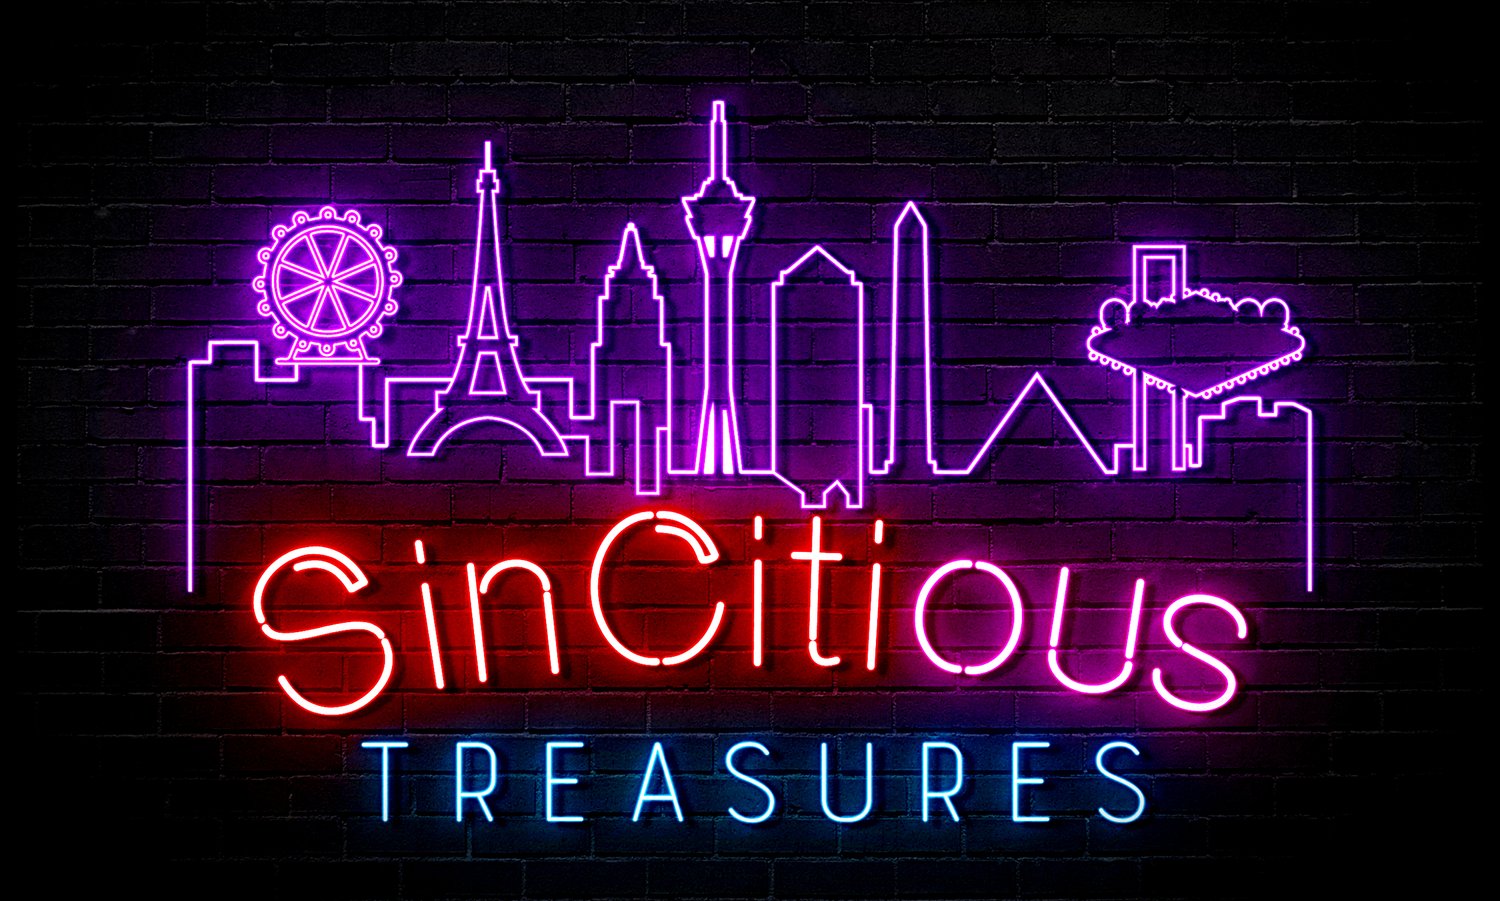 SinCitious Treasures